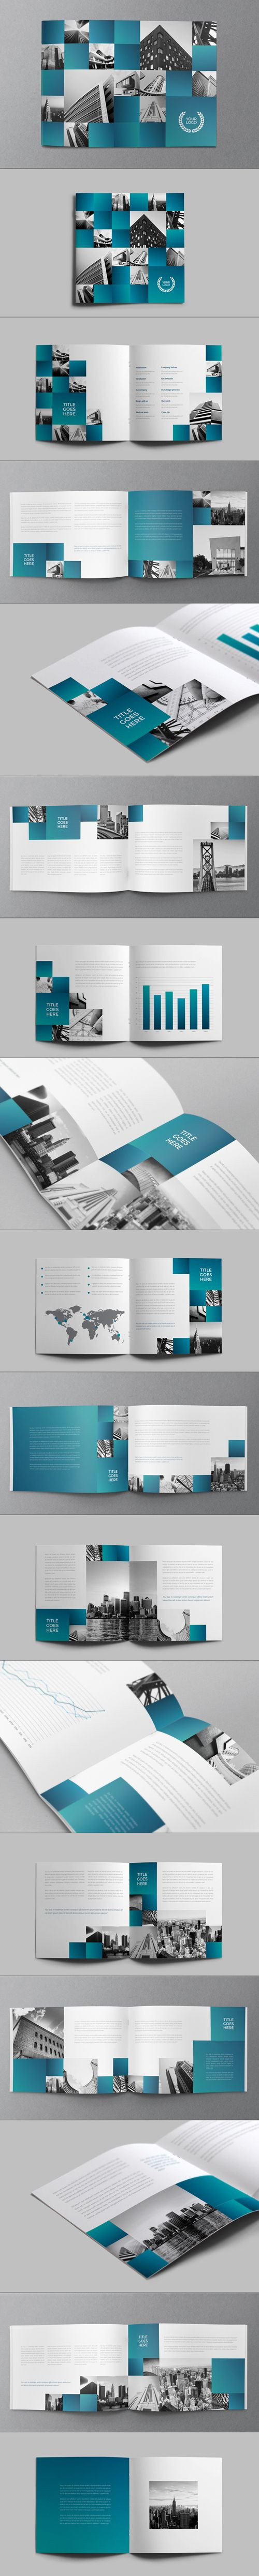 Professional Brochure Designs for Corporate Busine...